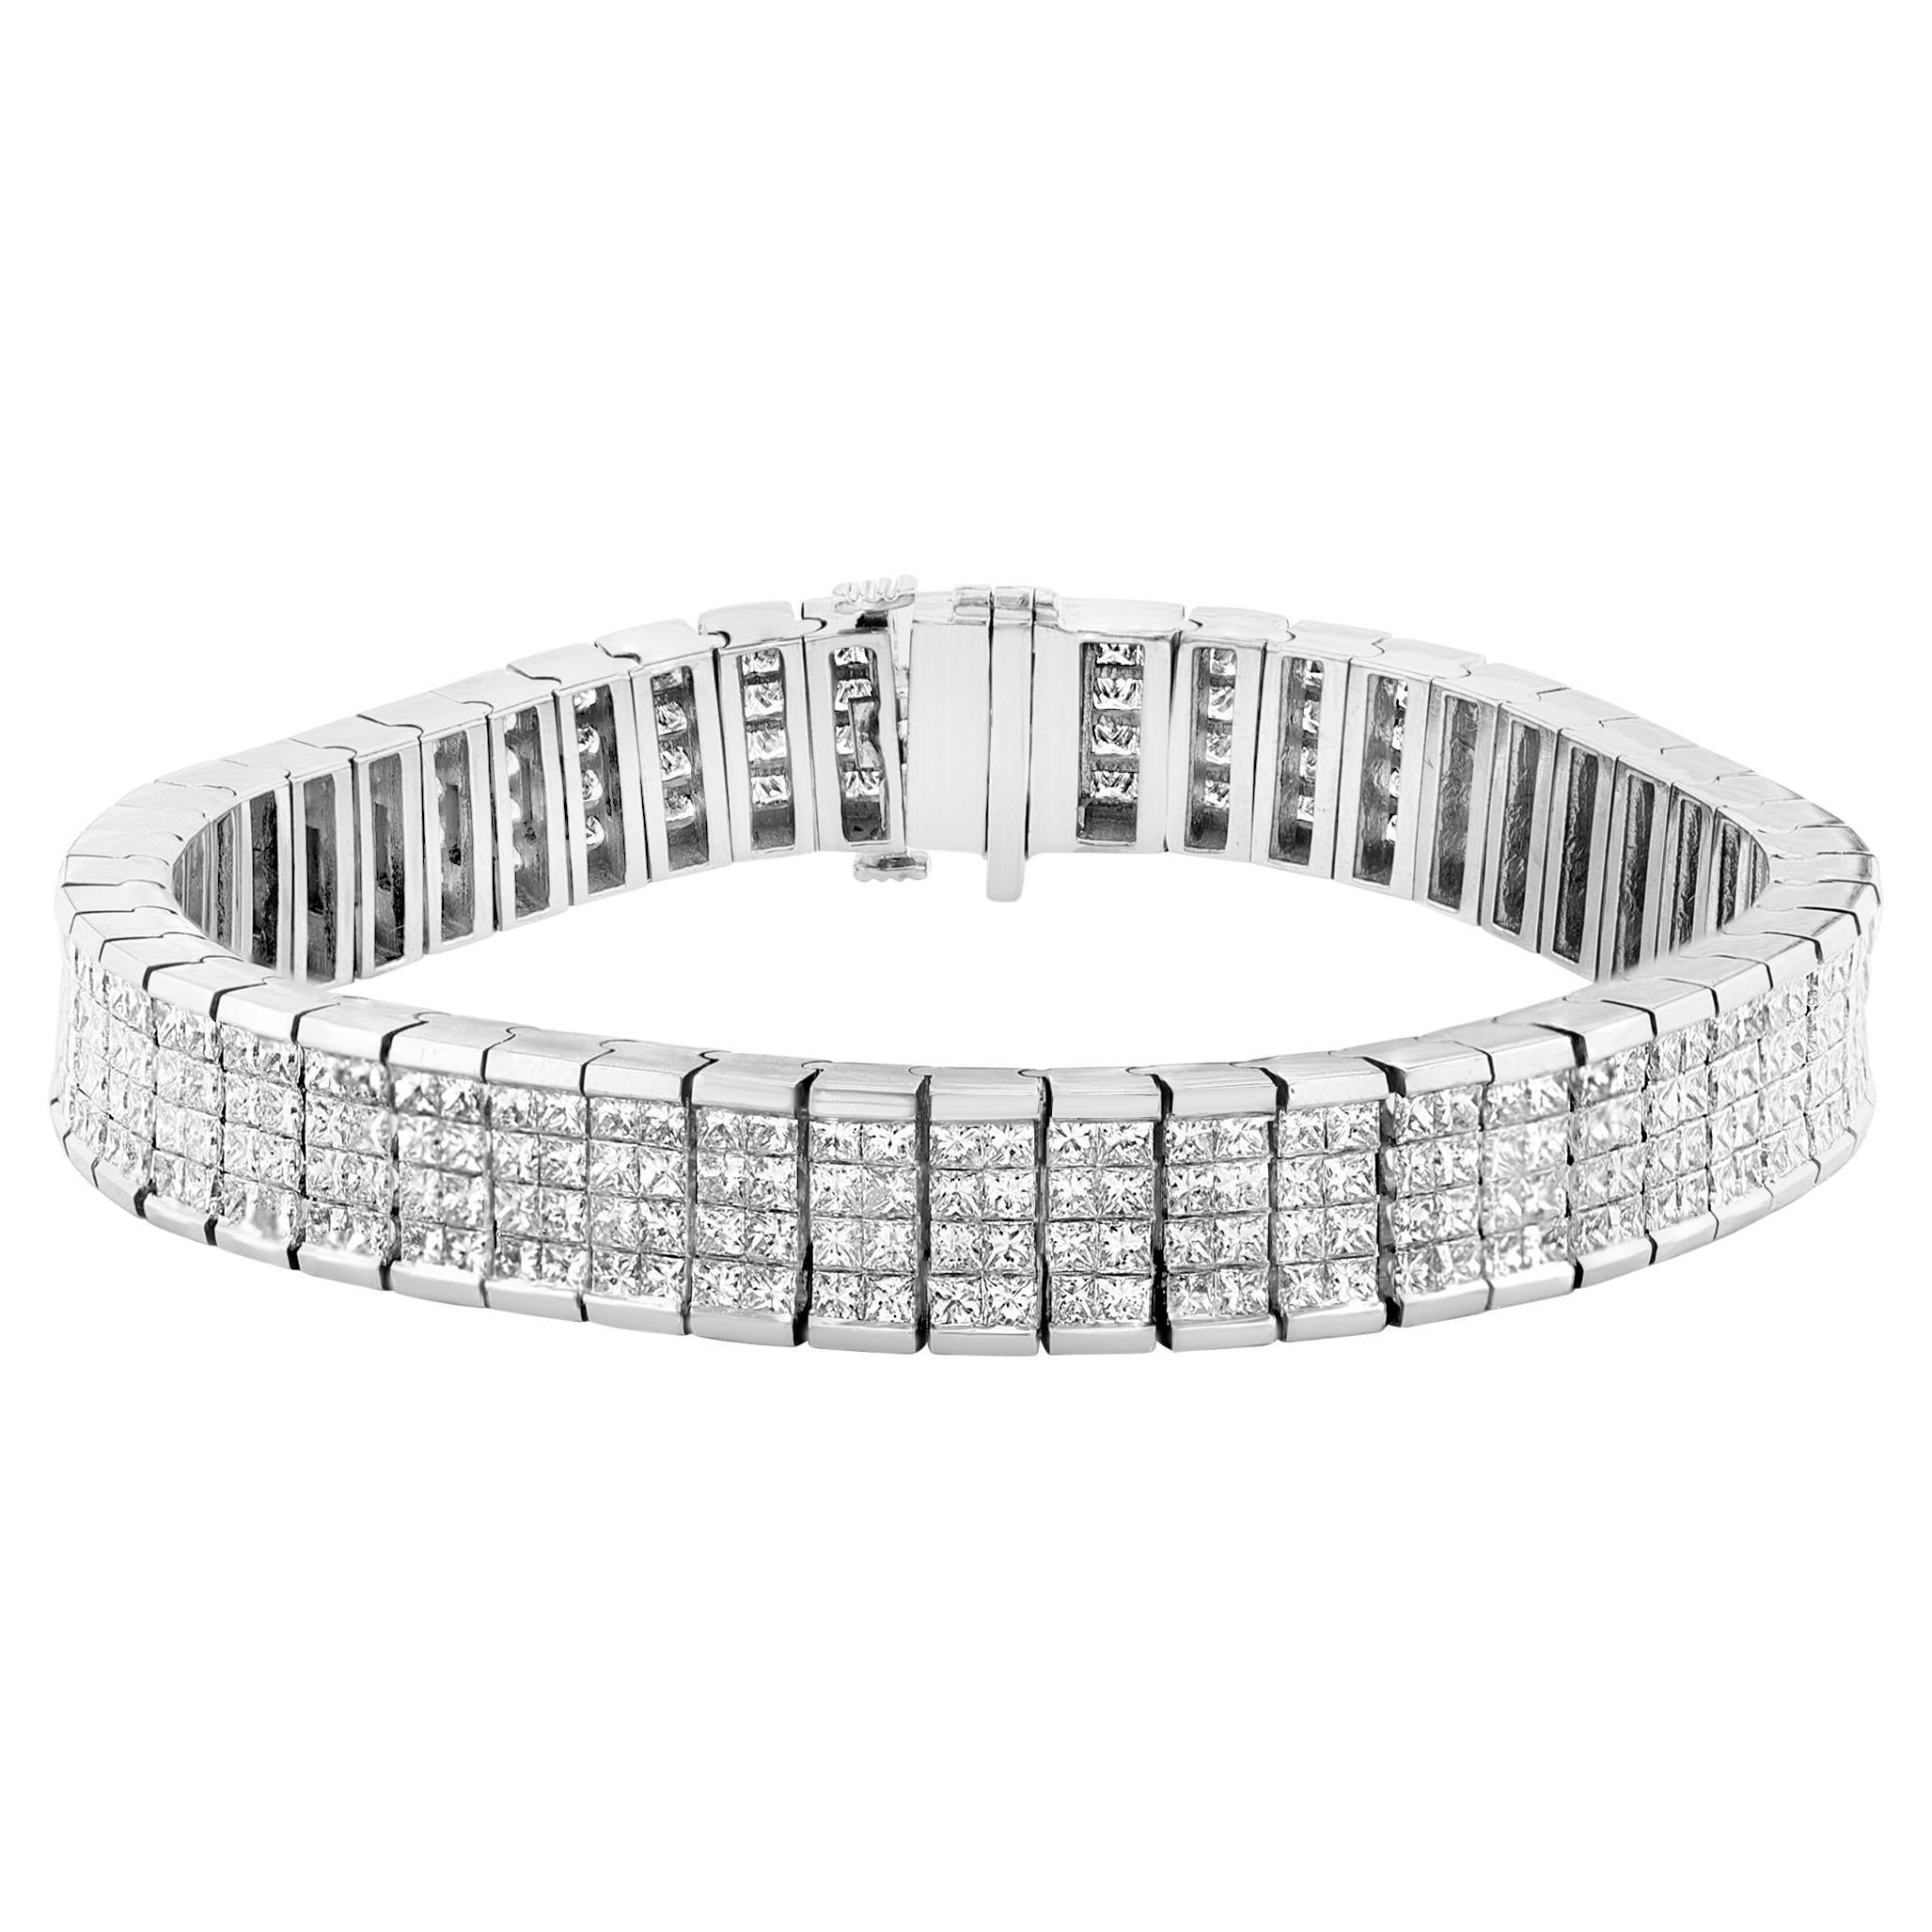 24 Carats Four Row Princess Cut Diamond Tennis Bracelet 18kt White Gold 7.3"